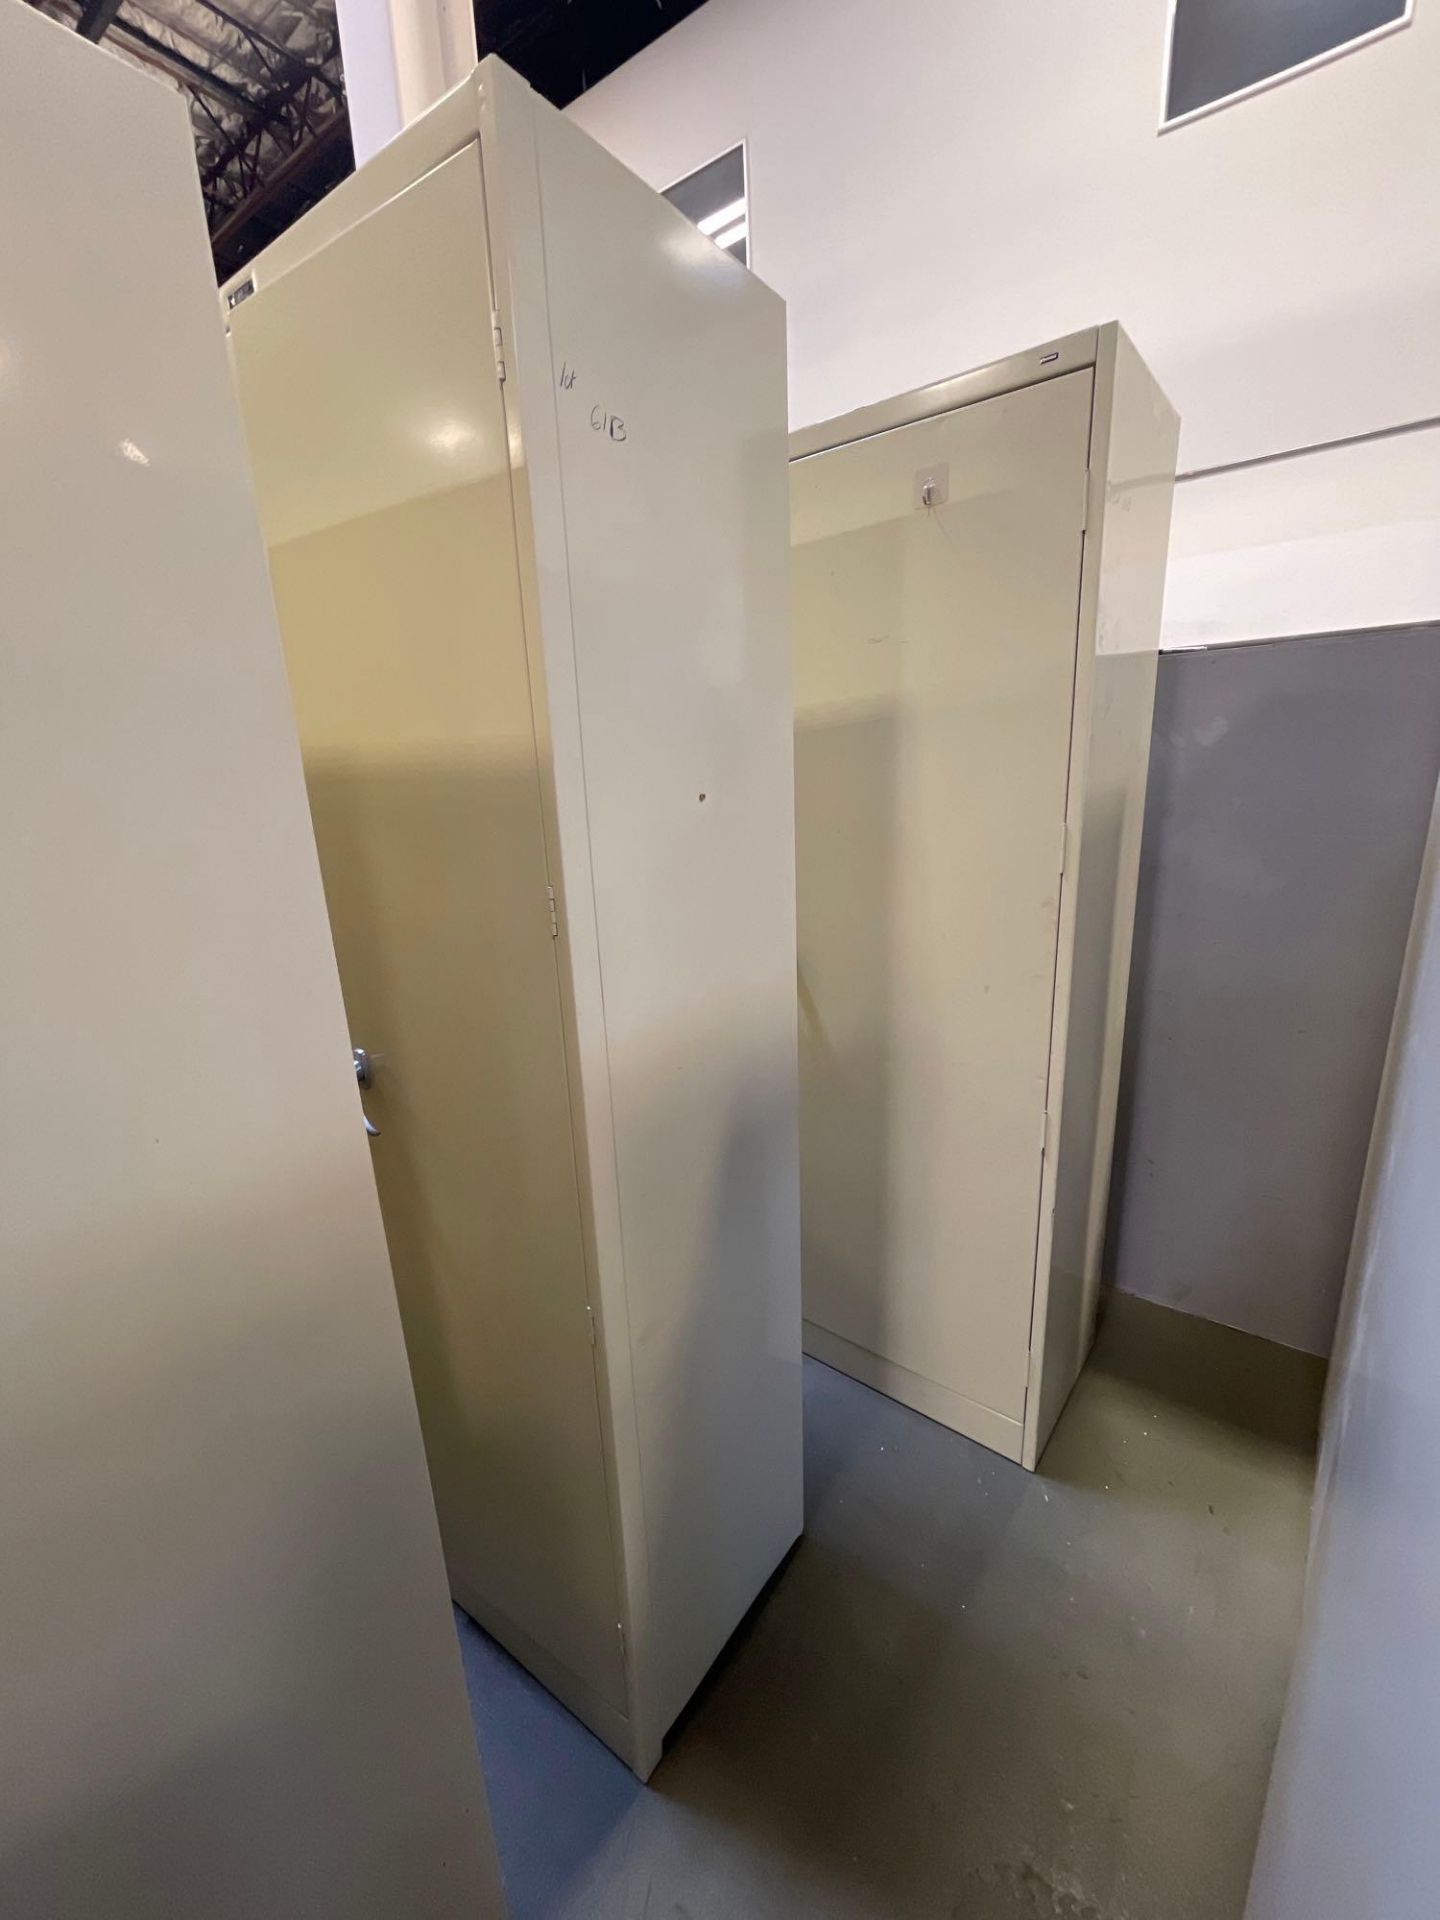 Lot of 5 Double Door Cabinets: (2) 36" X 24" X 72", (2) 36" X 18" X 78", (1) 36" X 18" X 72" - Image 4 of 6